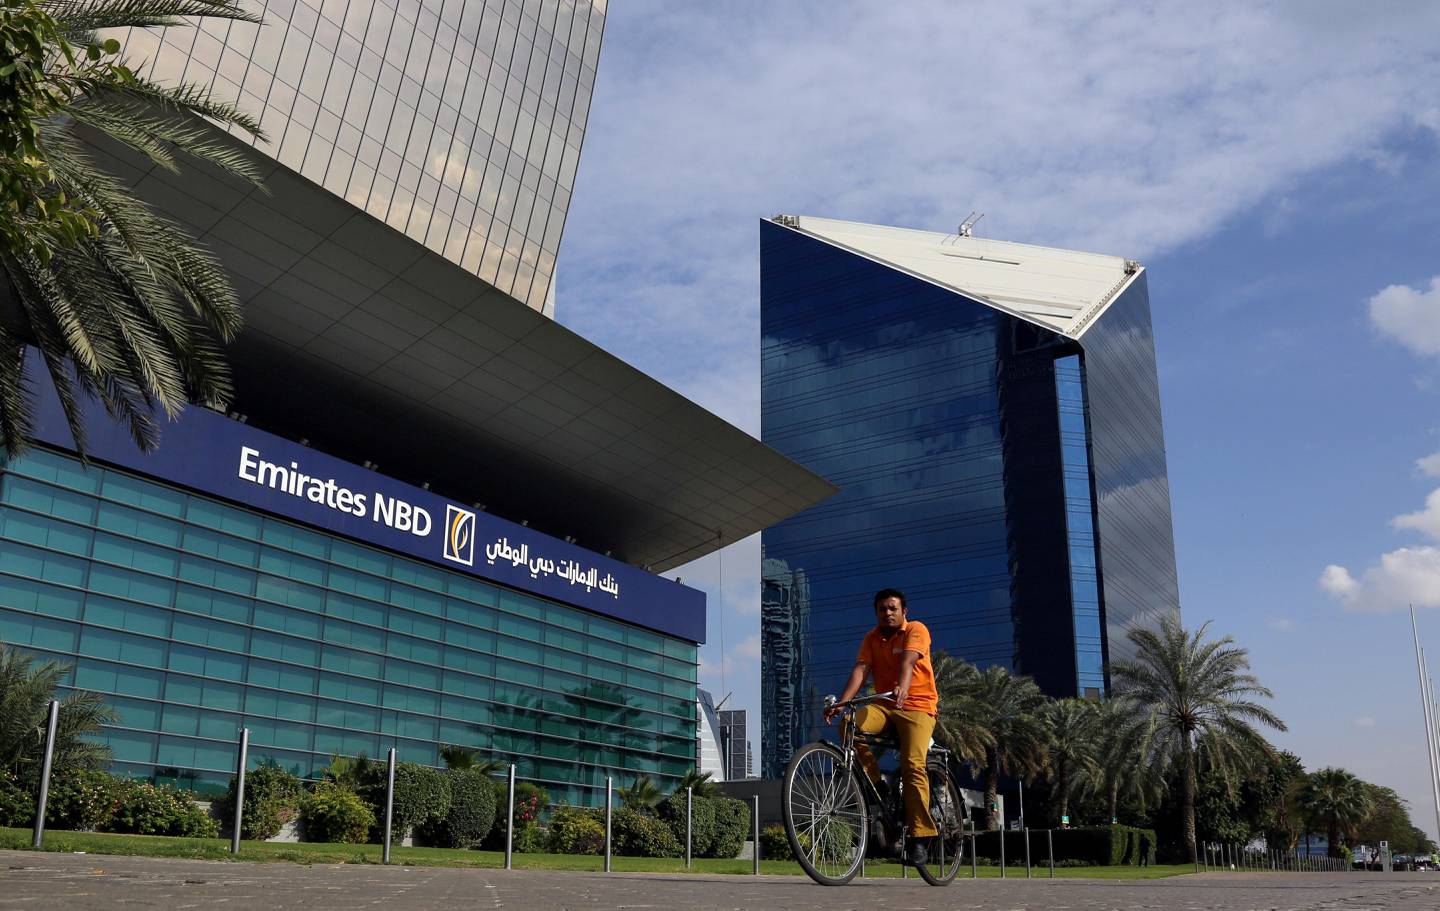 Emirates NBD's head office in Dubai. Reuters